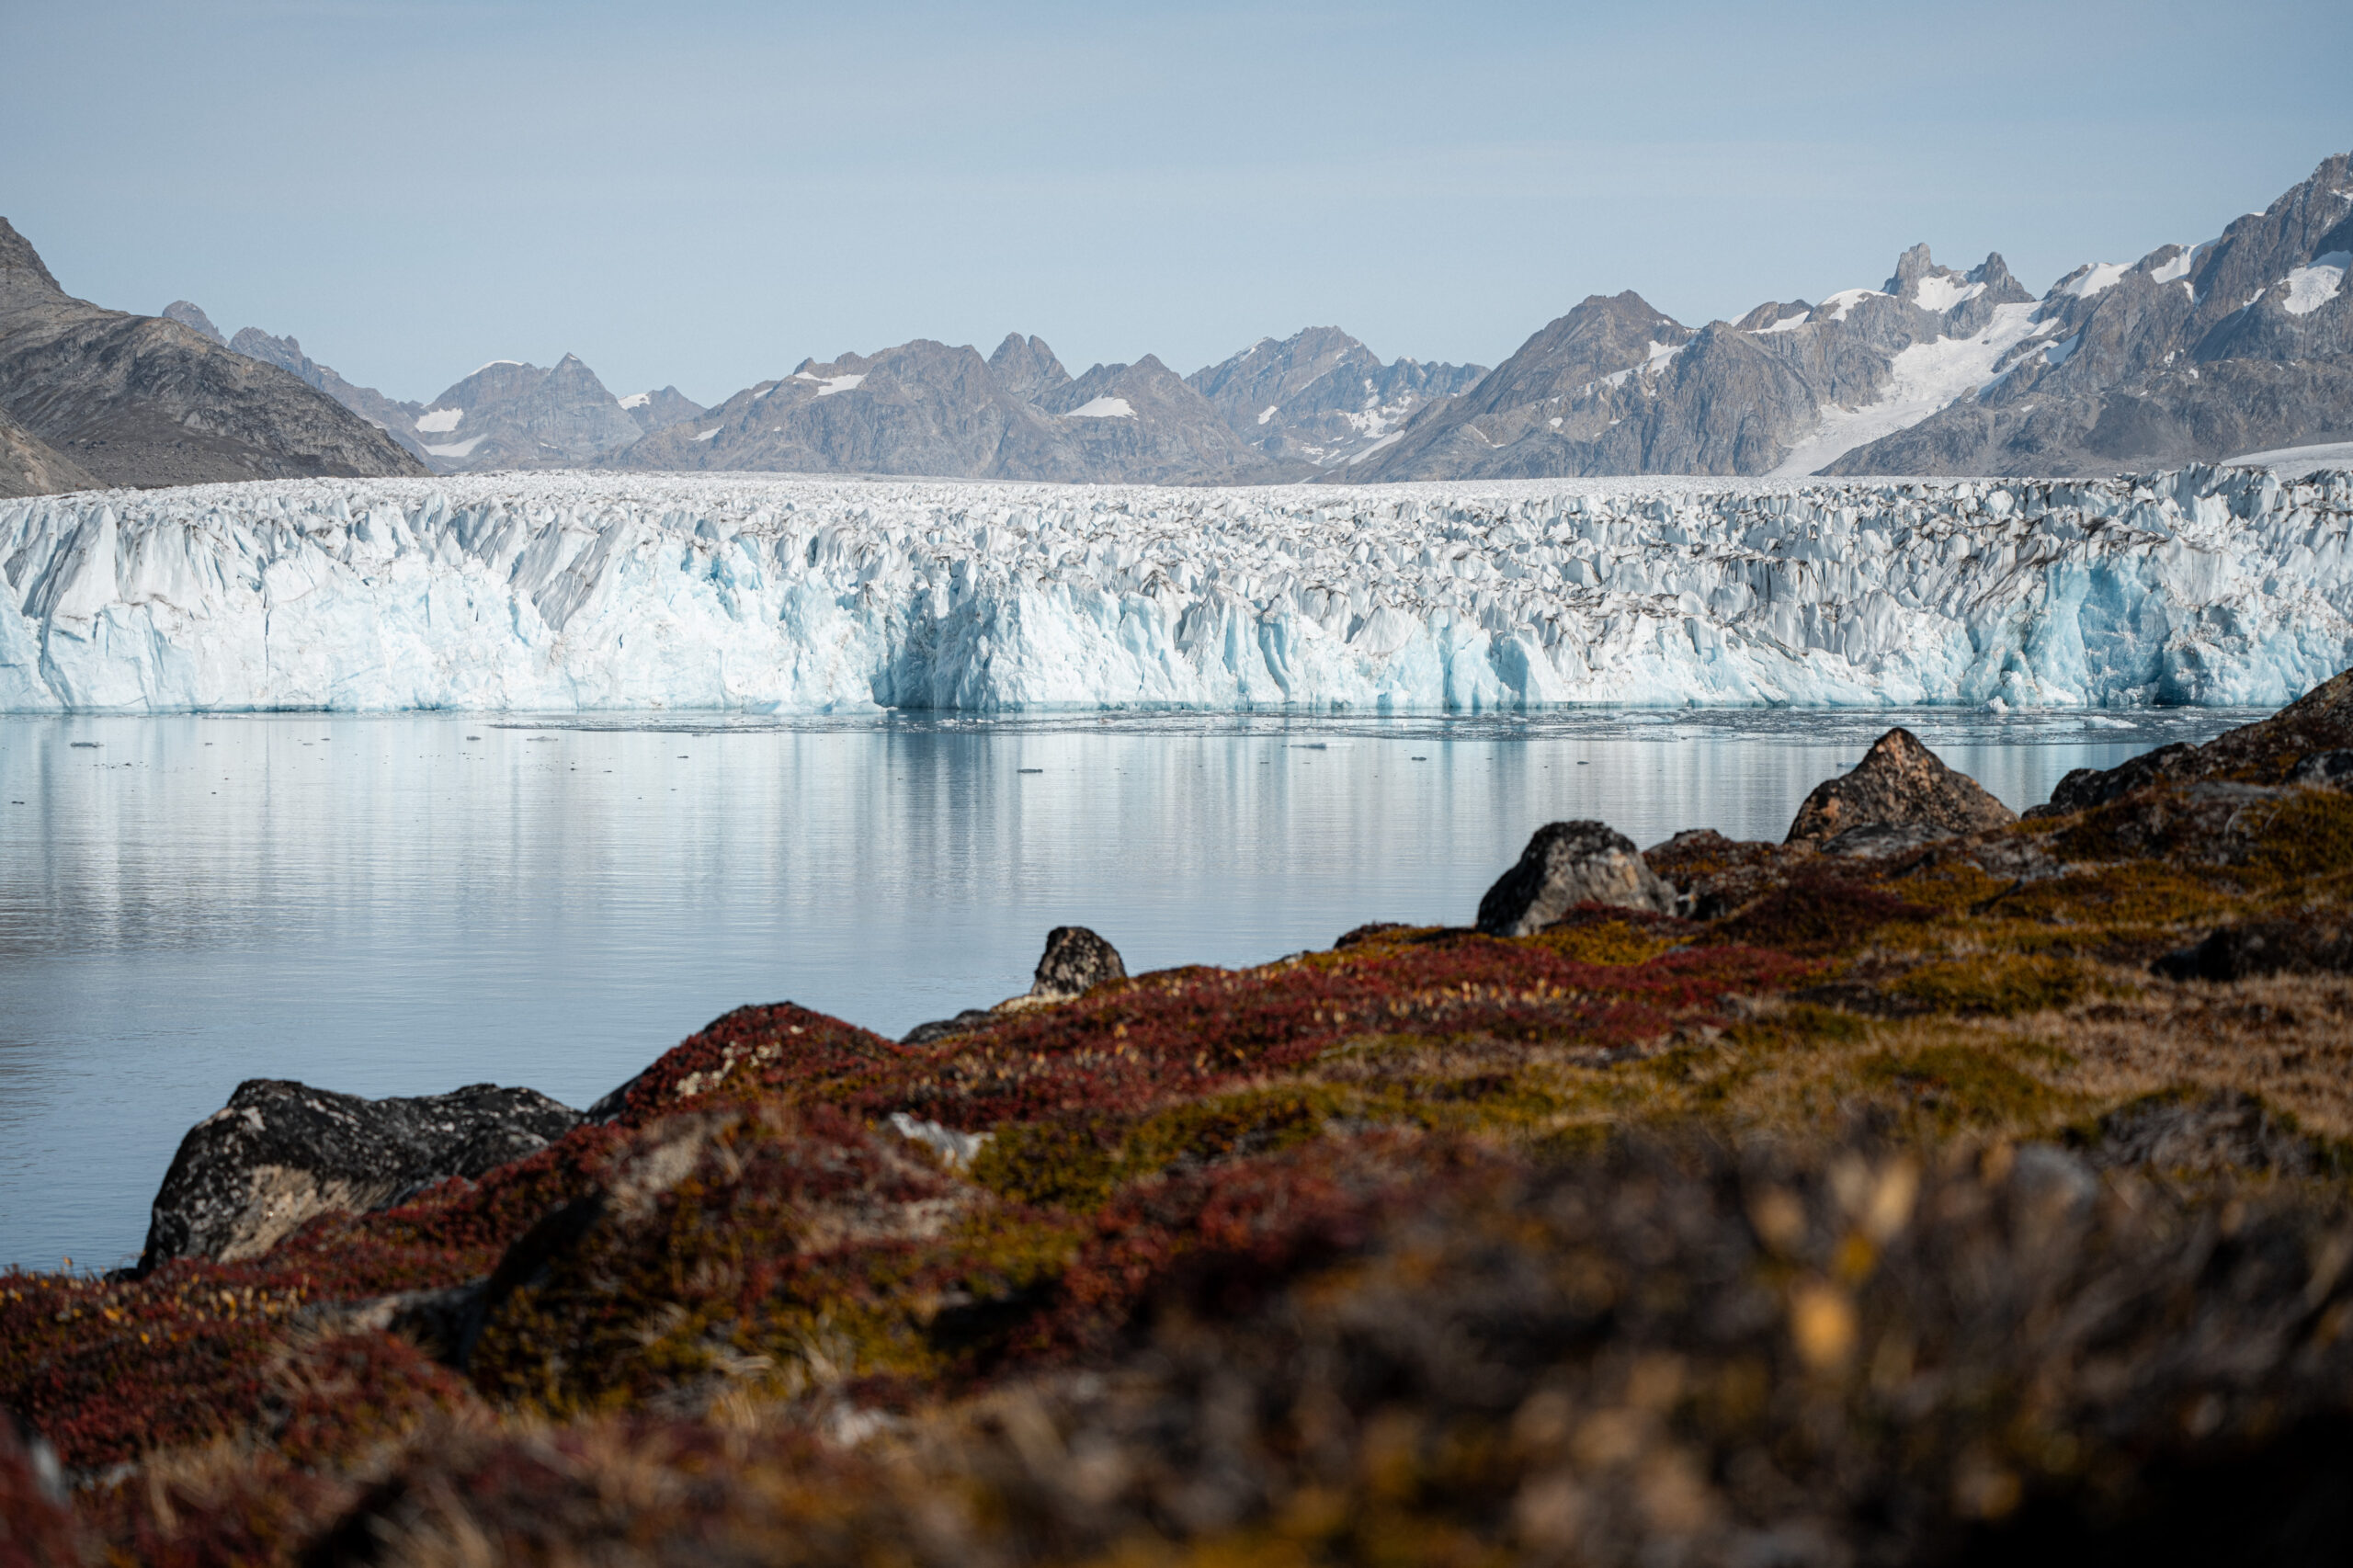 Knud Rasmussen Glacier from picknick spot. Photo by Chris Koenig - Visit Greenland